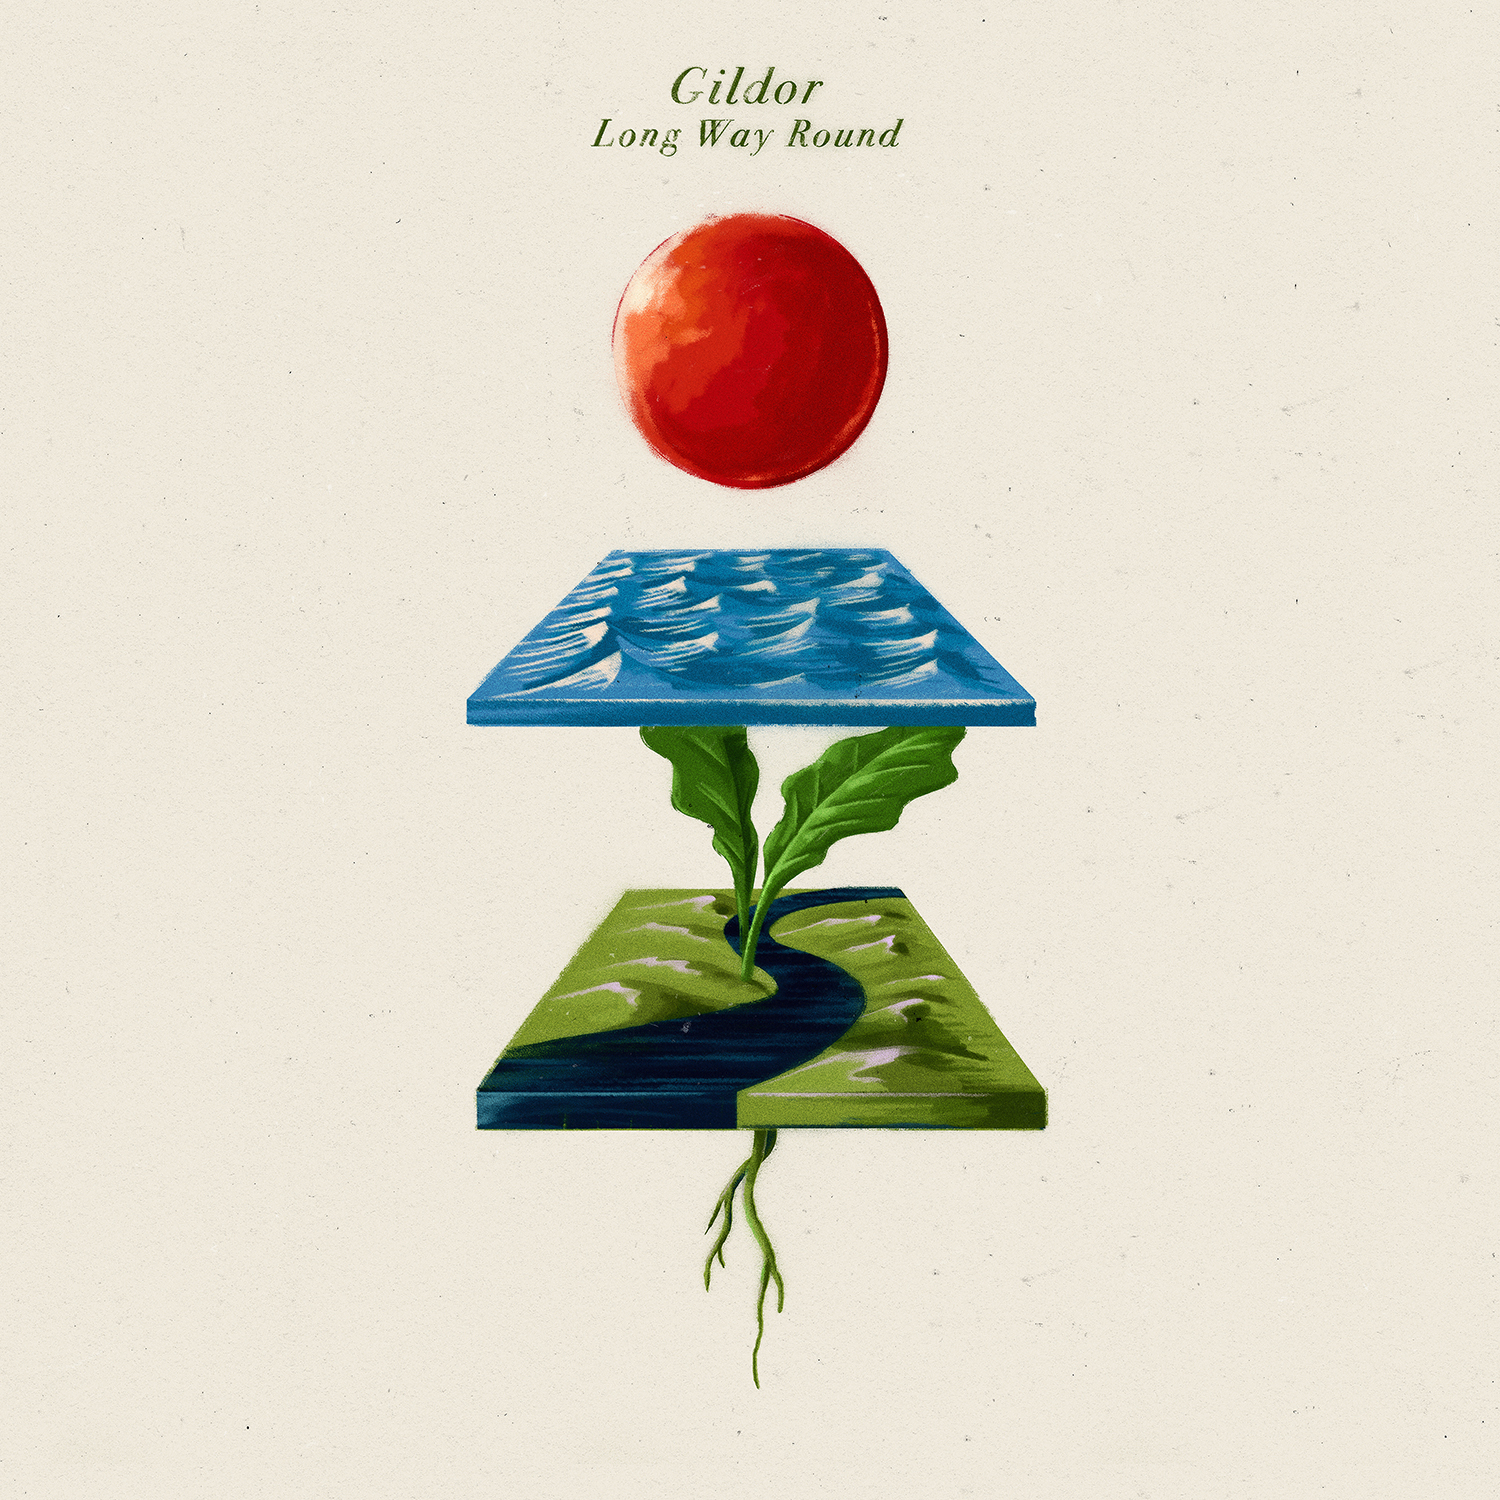 Gildor &#8211; Album Release